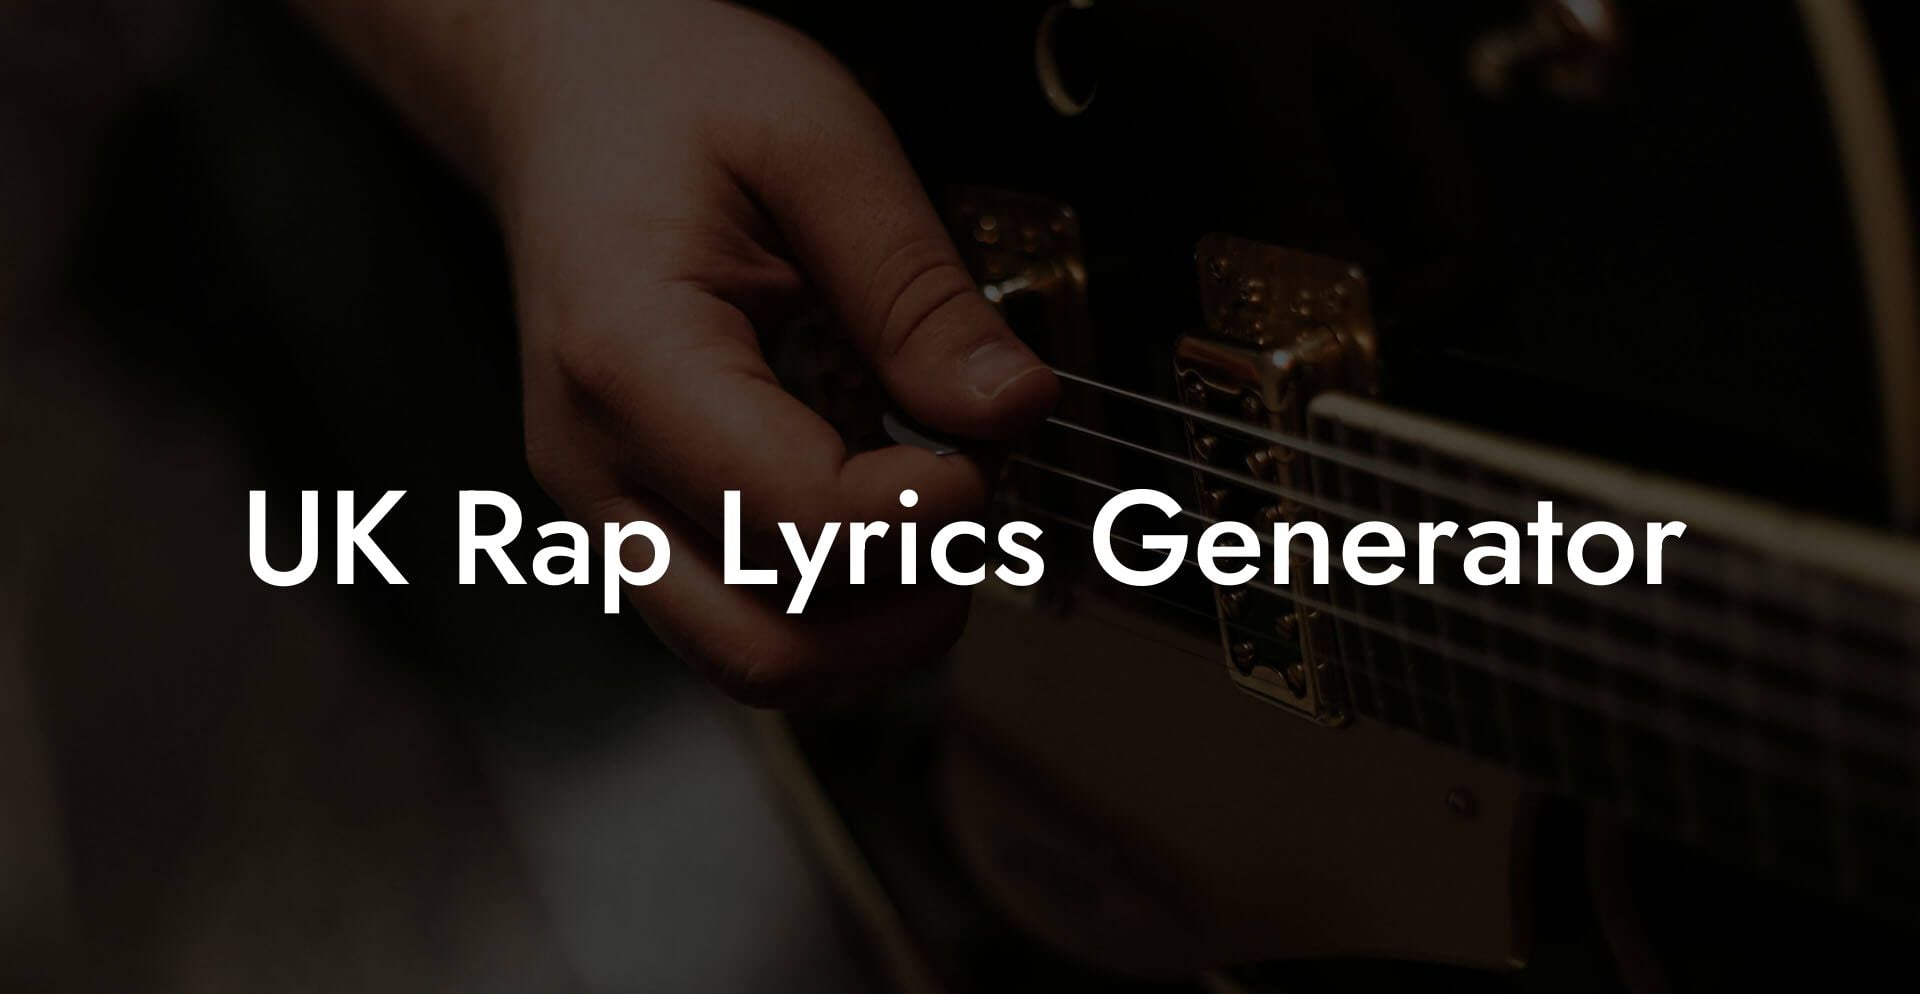 uk rap lyrics generator lyric assistant